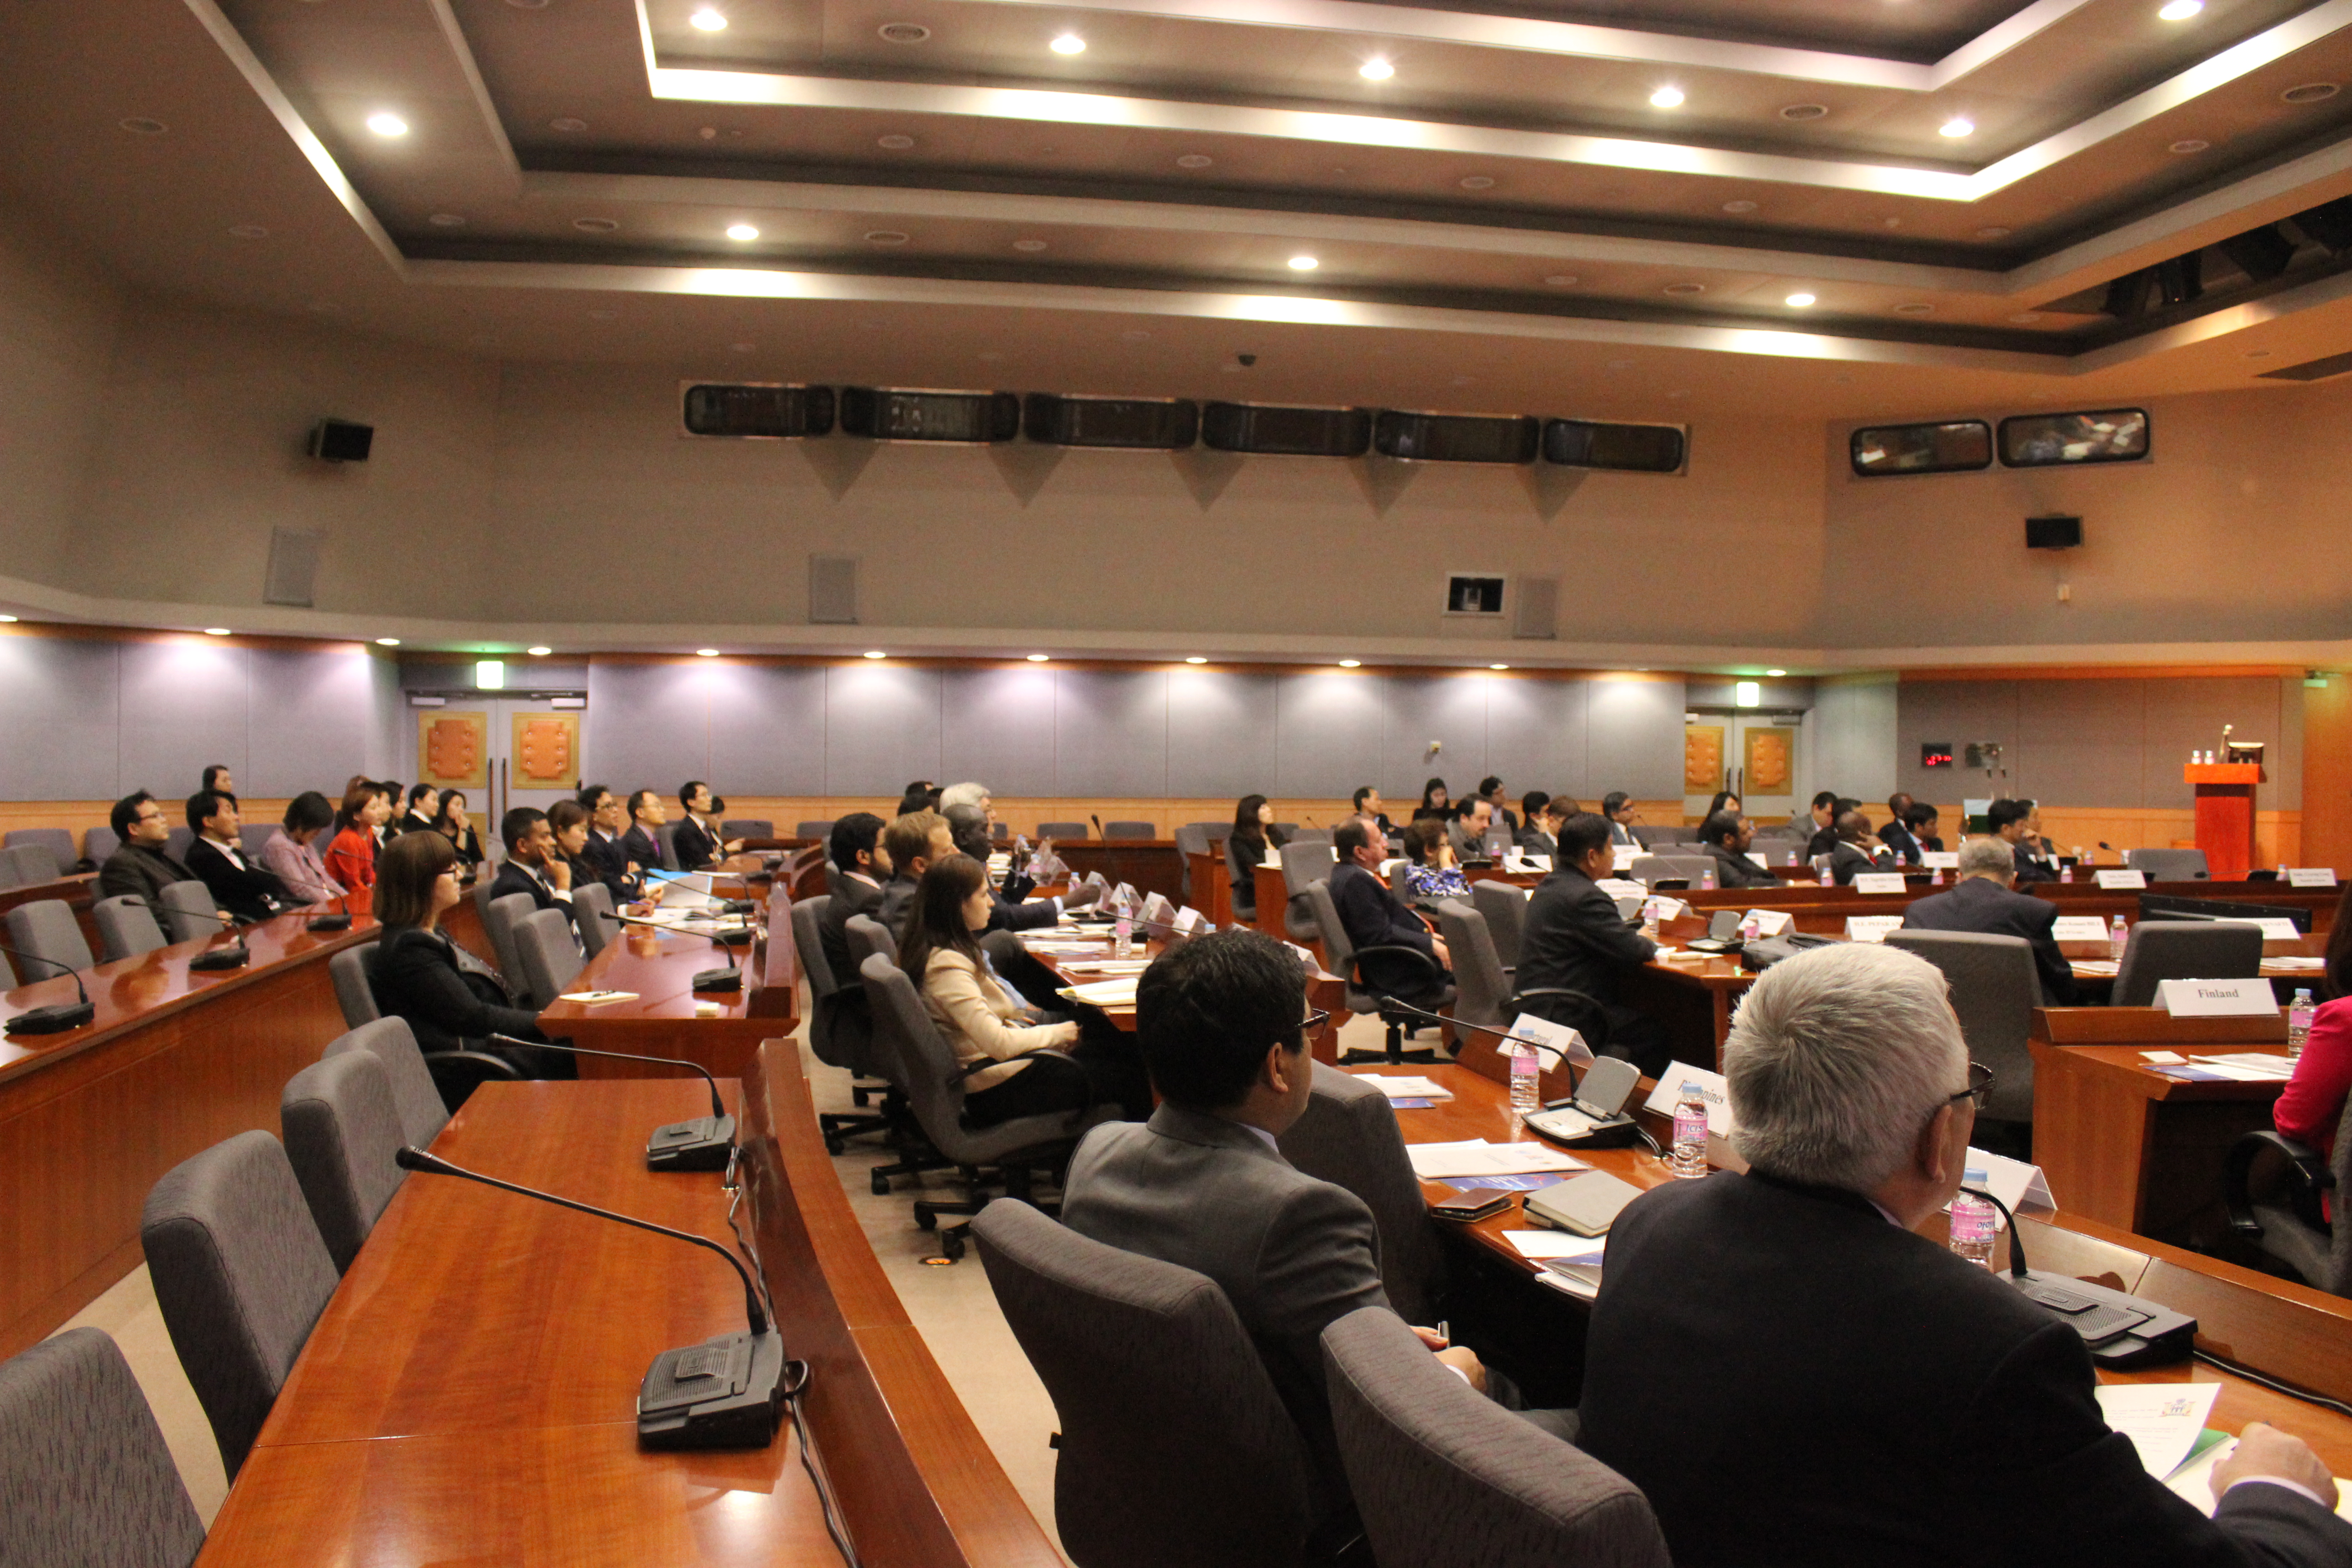 Briefing Session on the 2014 UN Public Service Forum